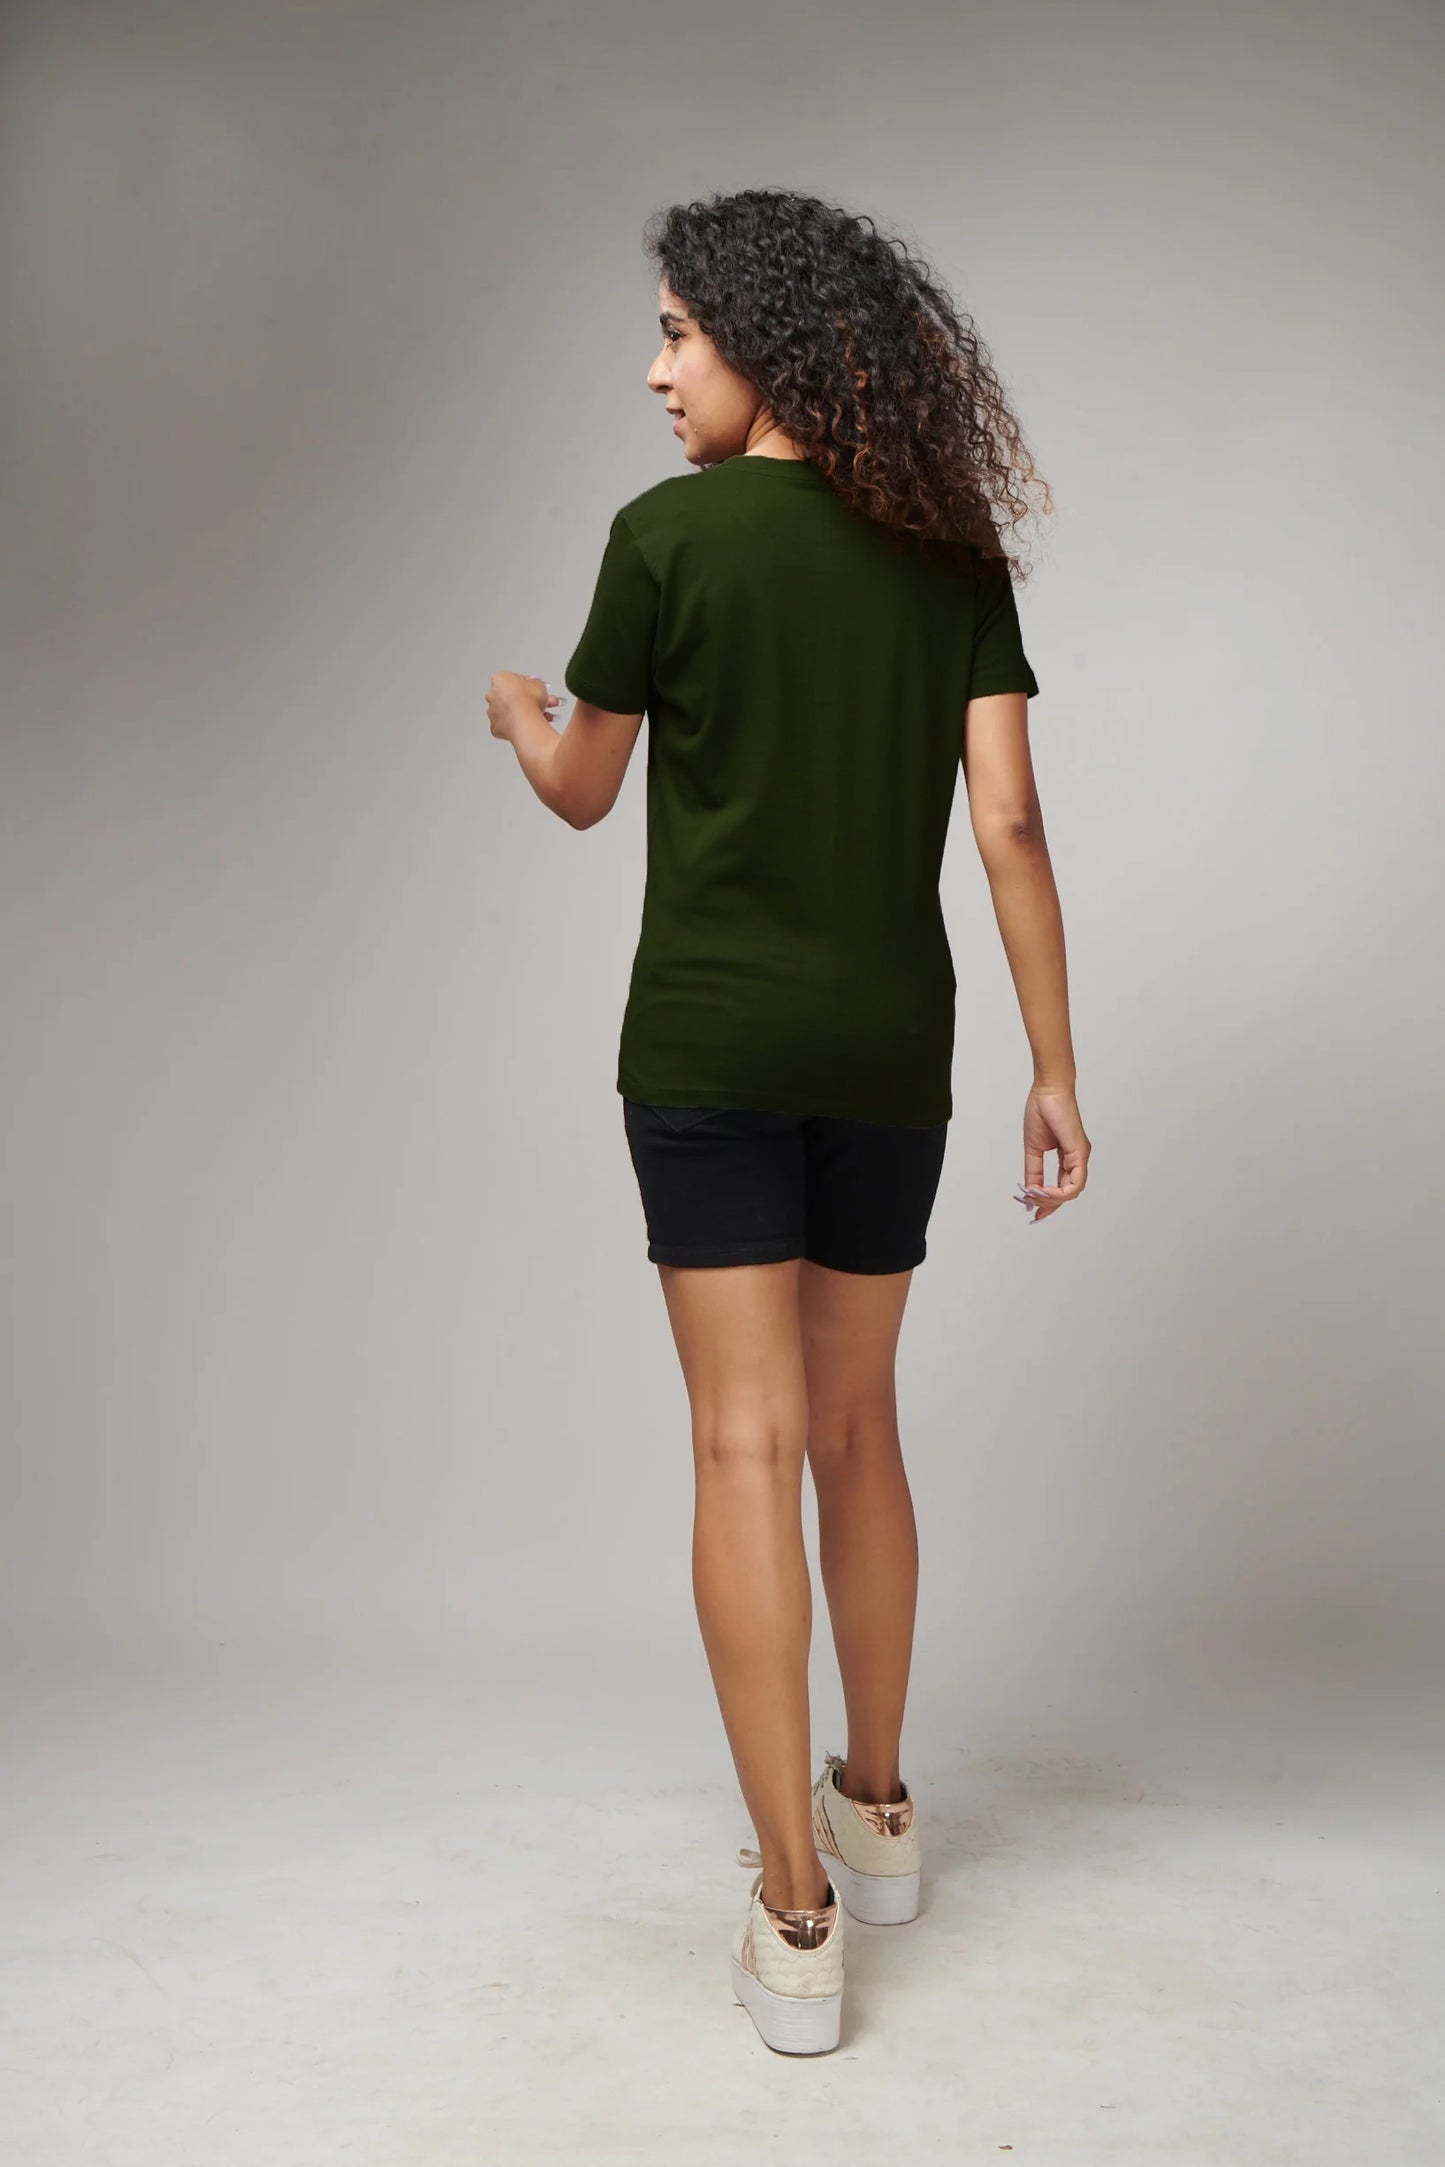 Women's Basic Olive Green Half Sleeves T-Shirt